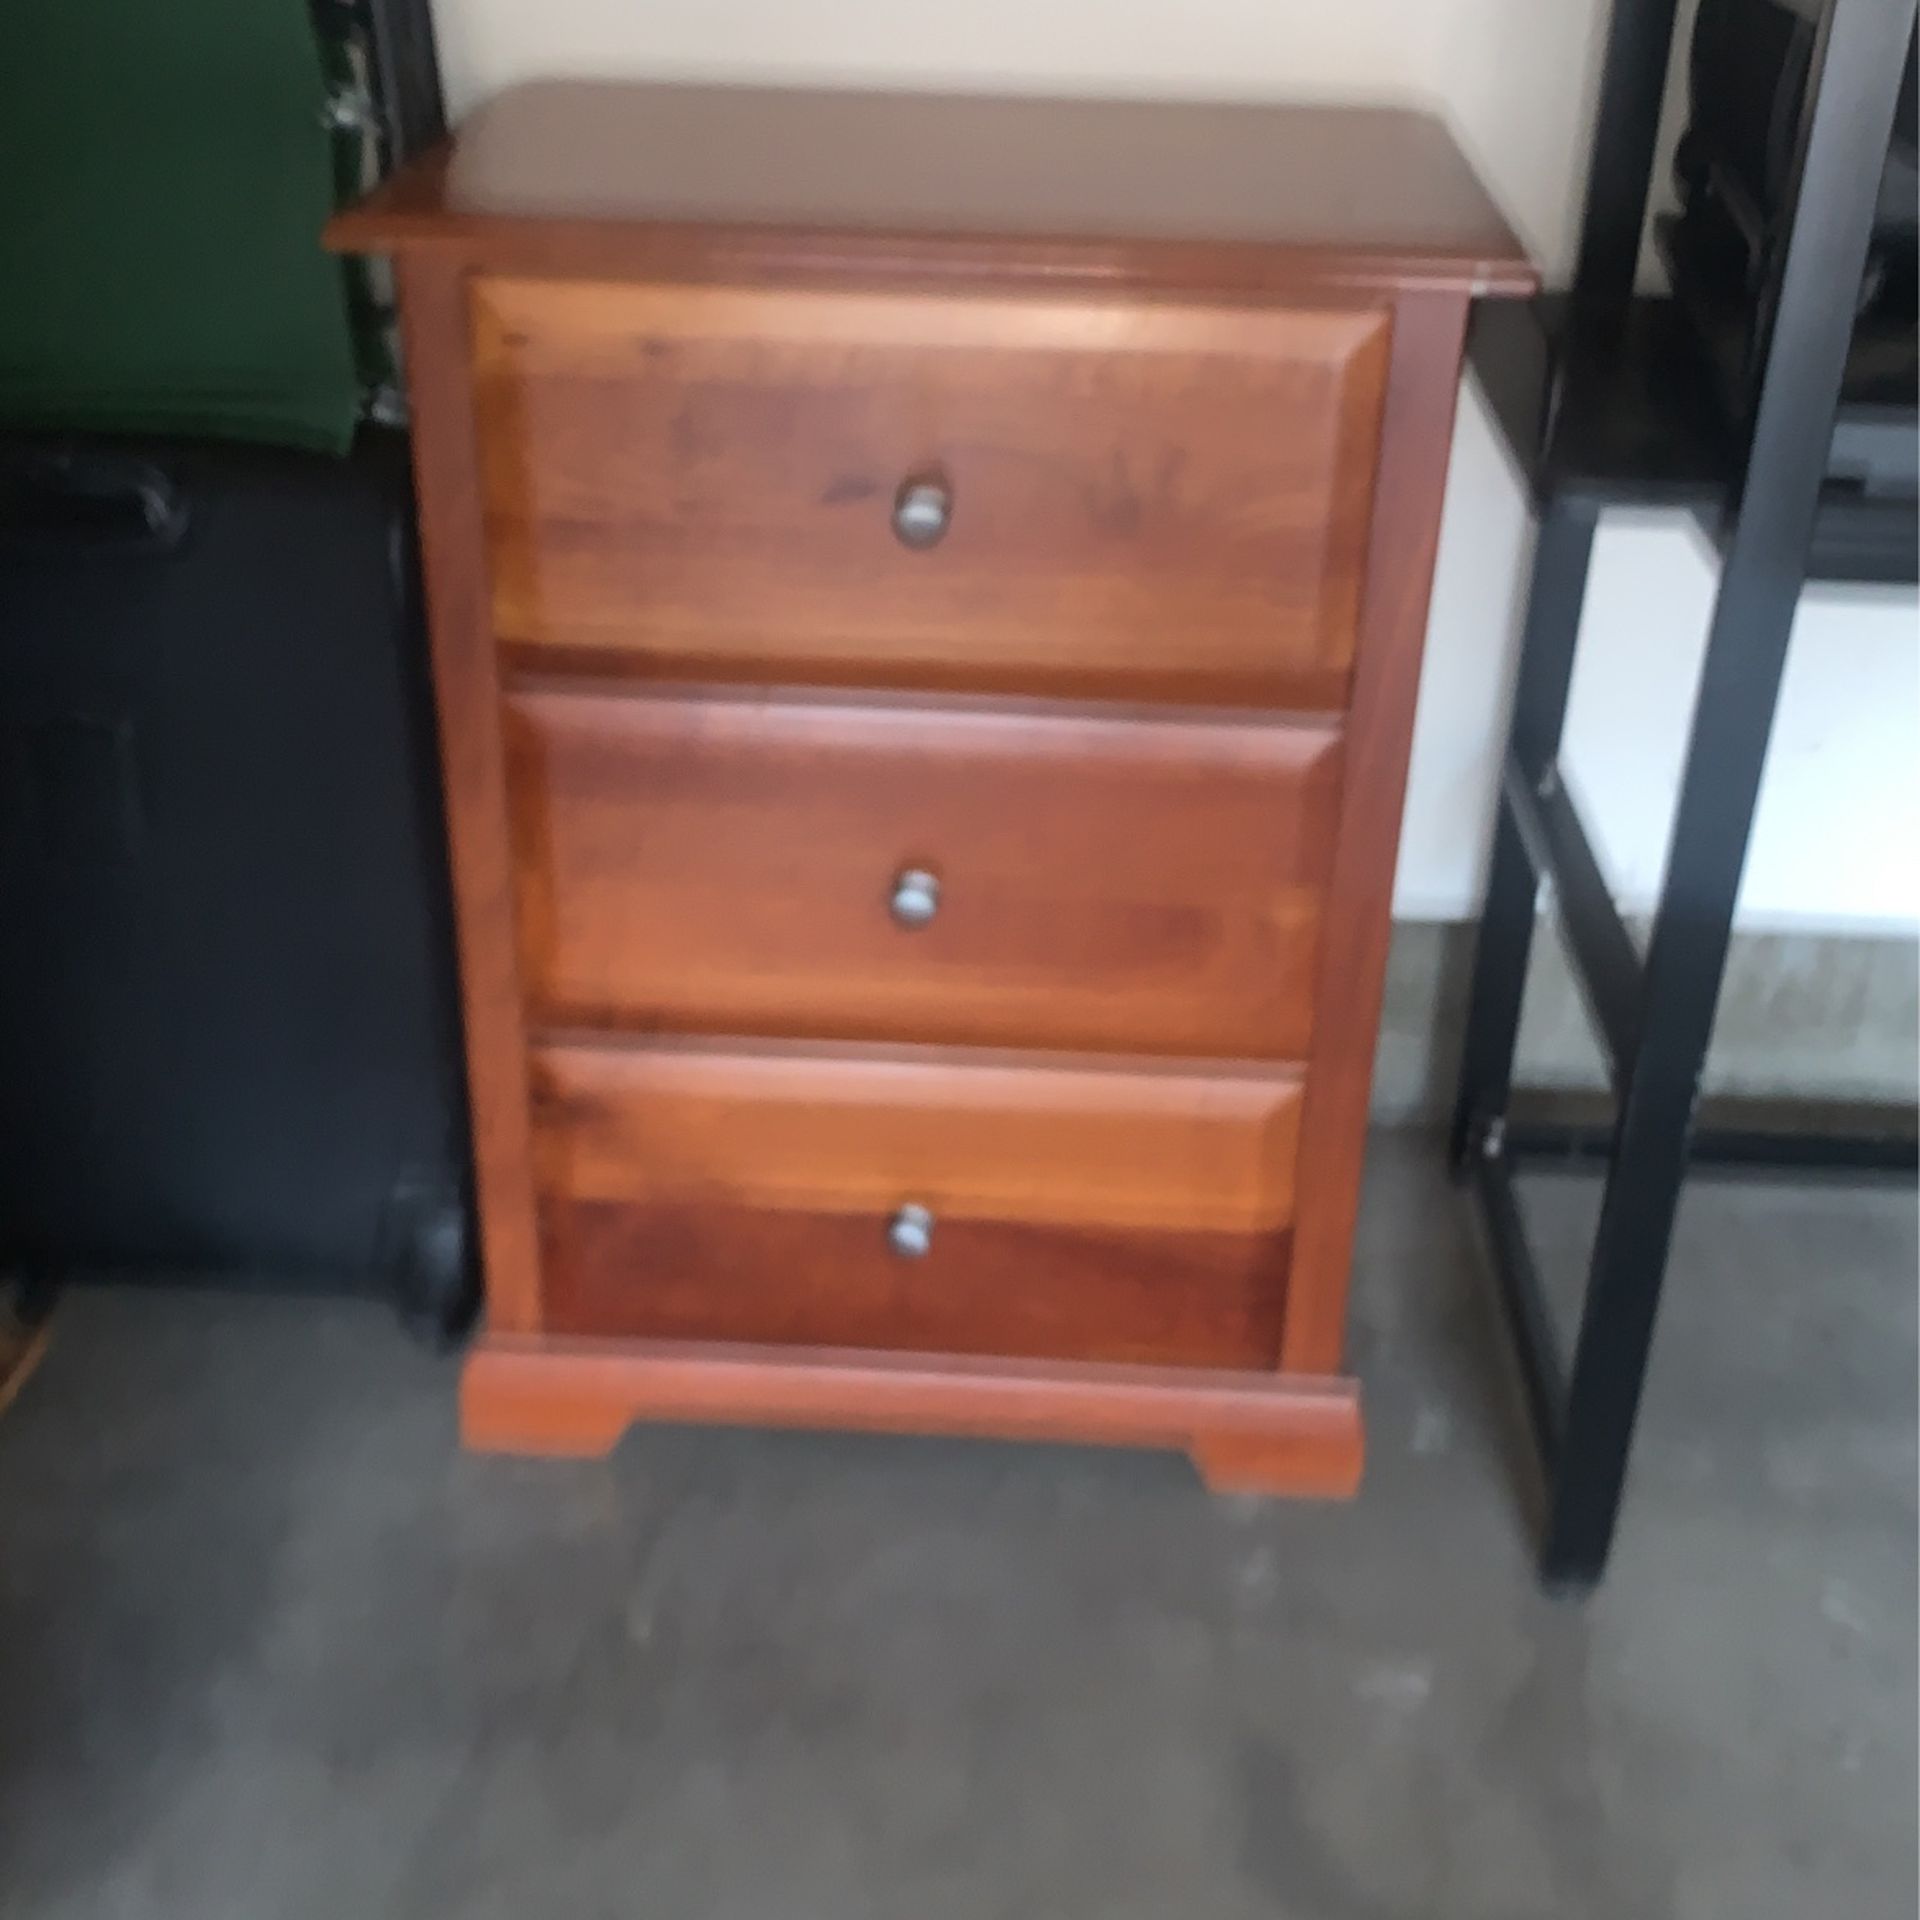 solid wood 3 shelved dresser (can’t open top shelf)